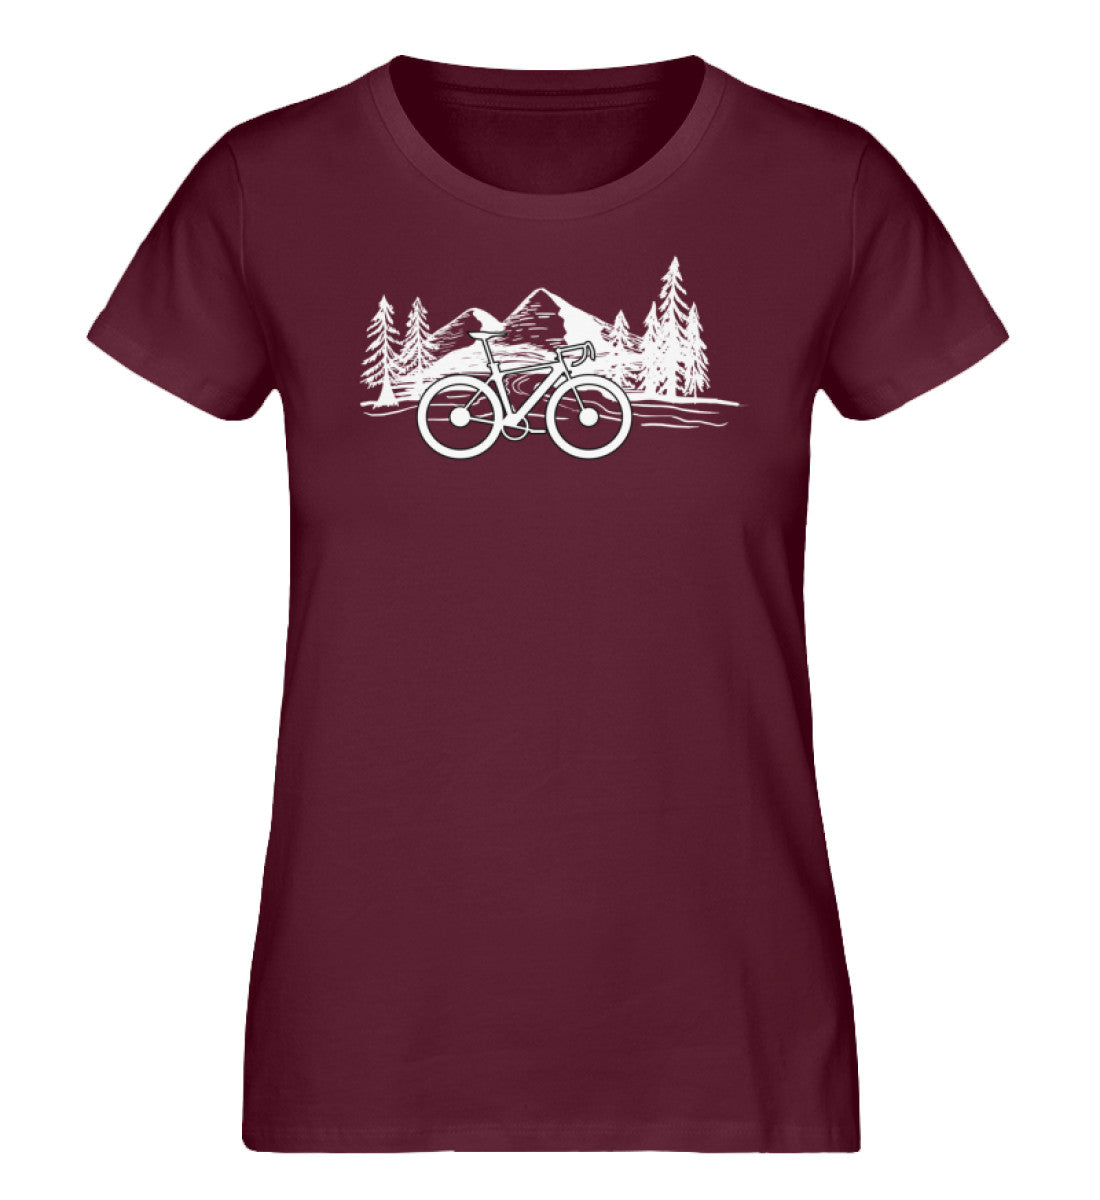 Fahrrad und Berge - Damen Premium Organic T-Shirt fahrrad mountainbike Weinrot